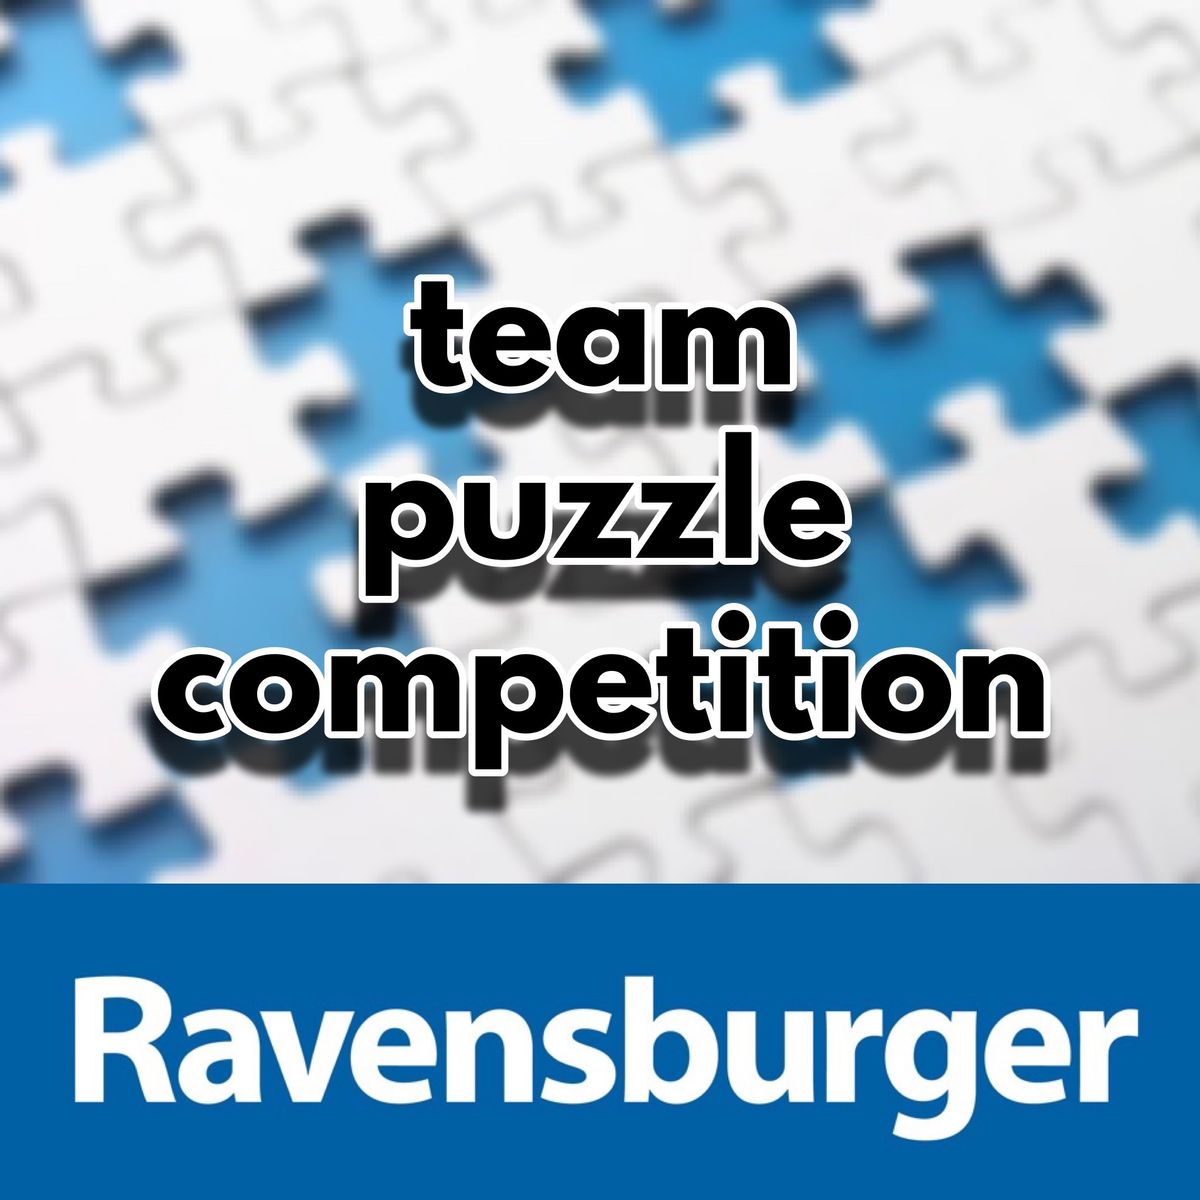 Ravensburger Puzzle Competition